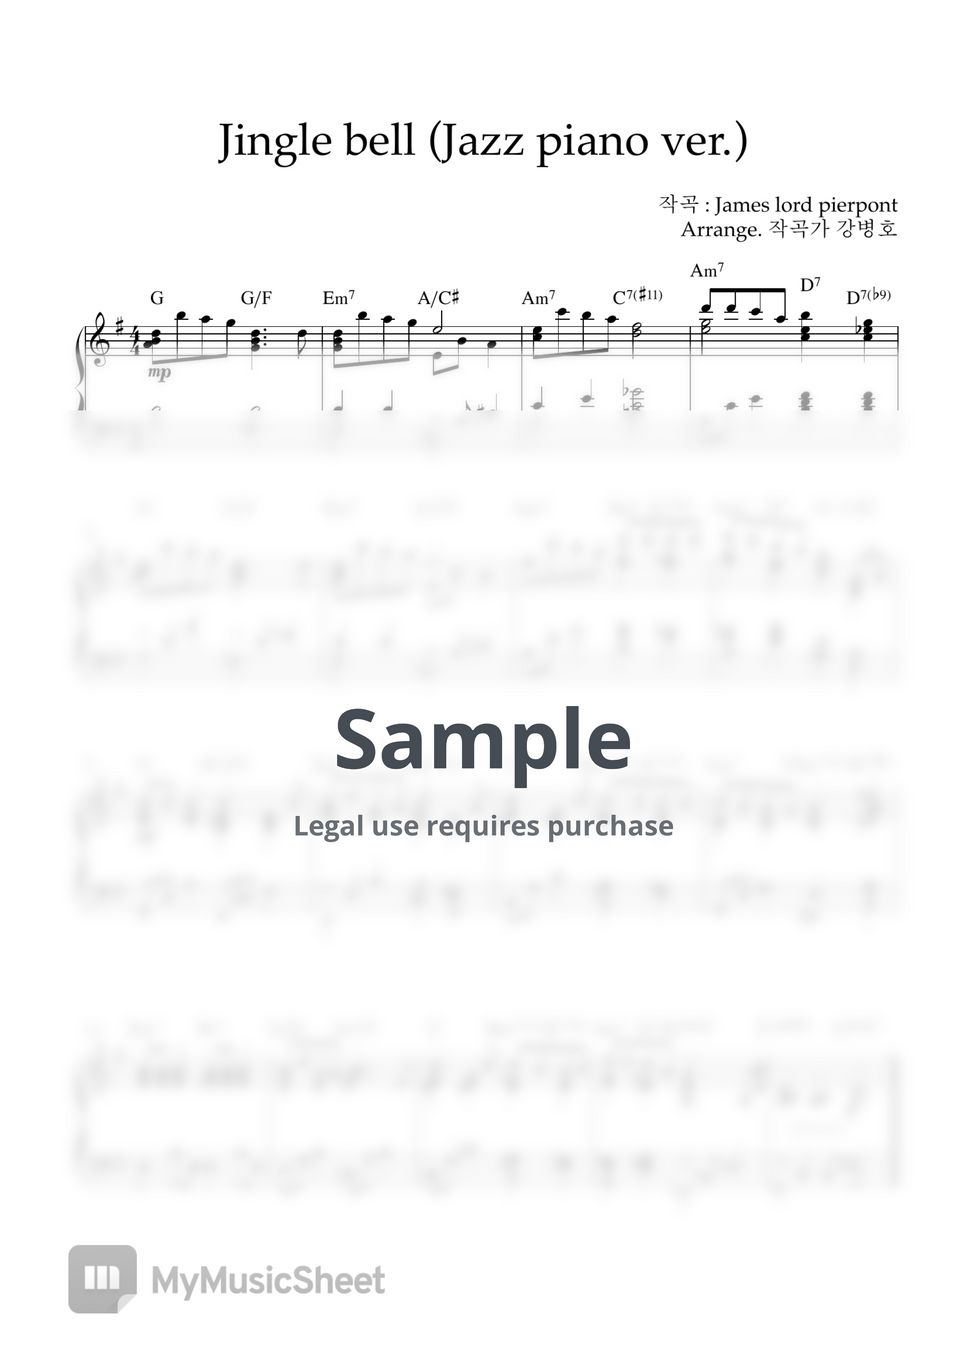 James lord pierpont - Jingle bell (재즈 피아노 ver.) by 작곡가 강병호